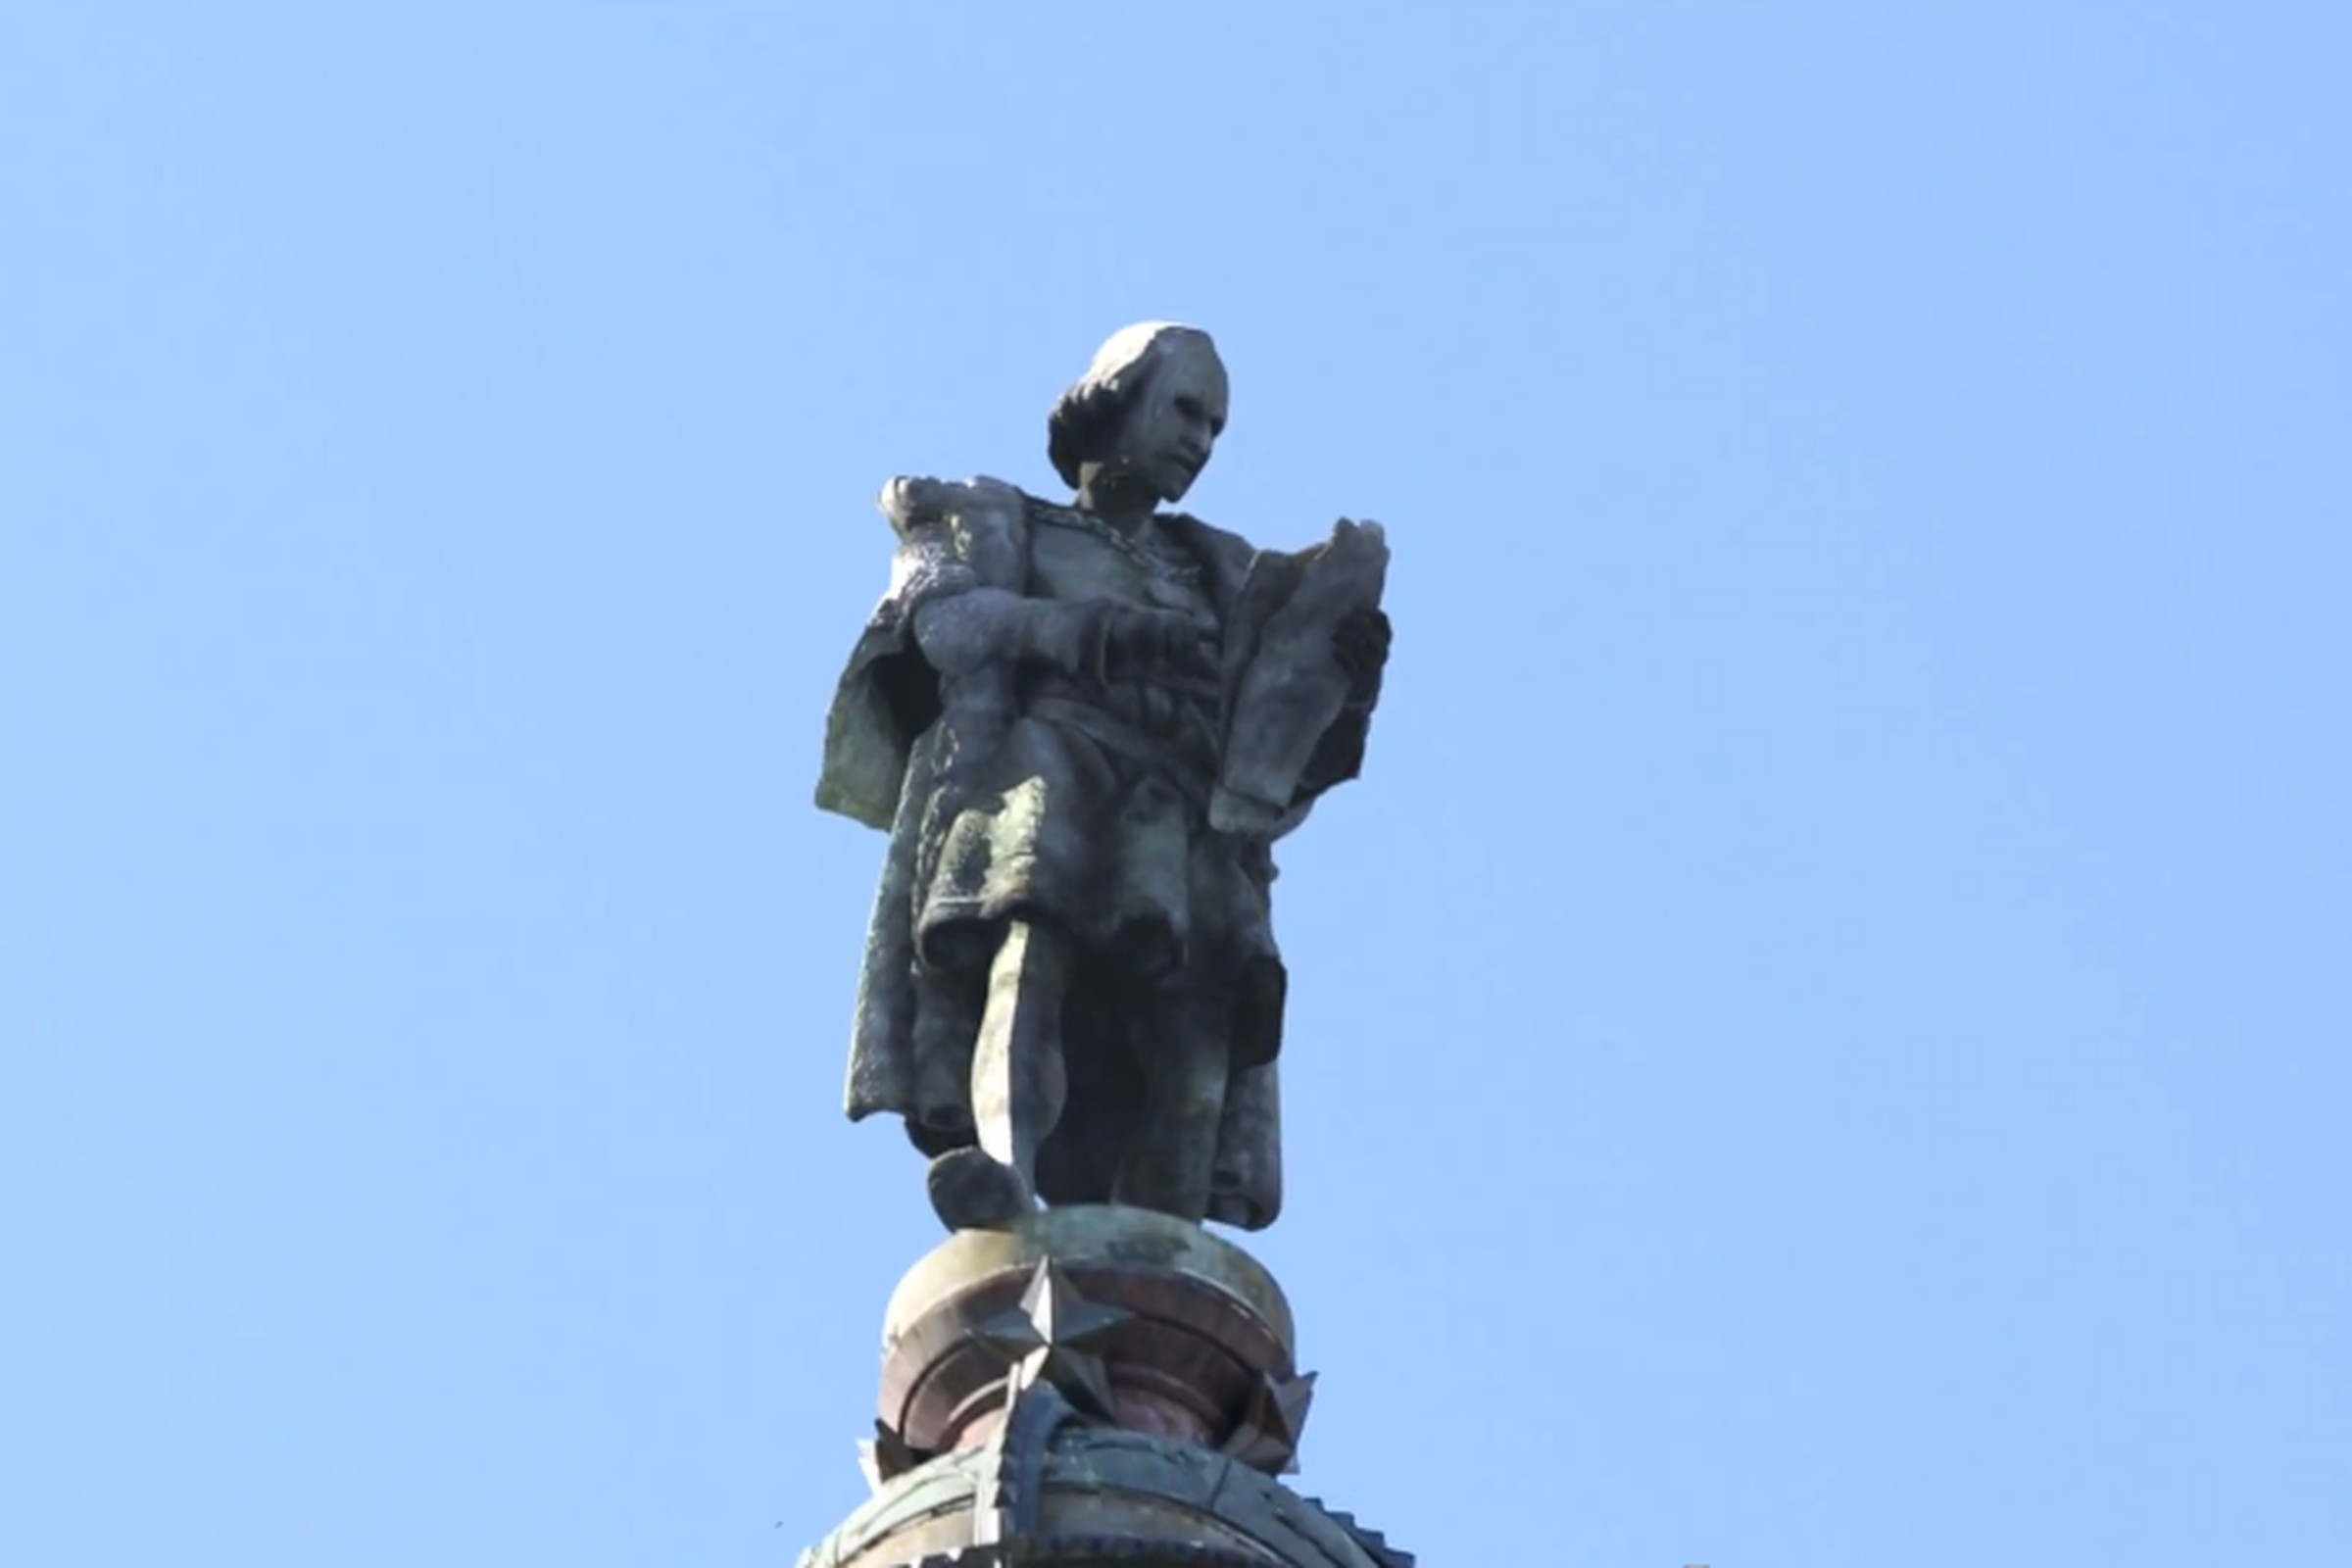 Barcelona Columbus statue taking phone call